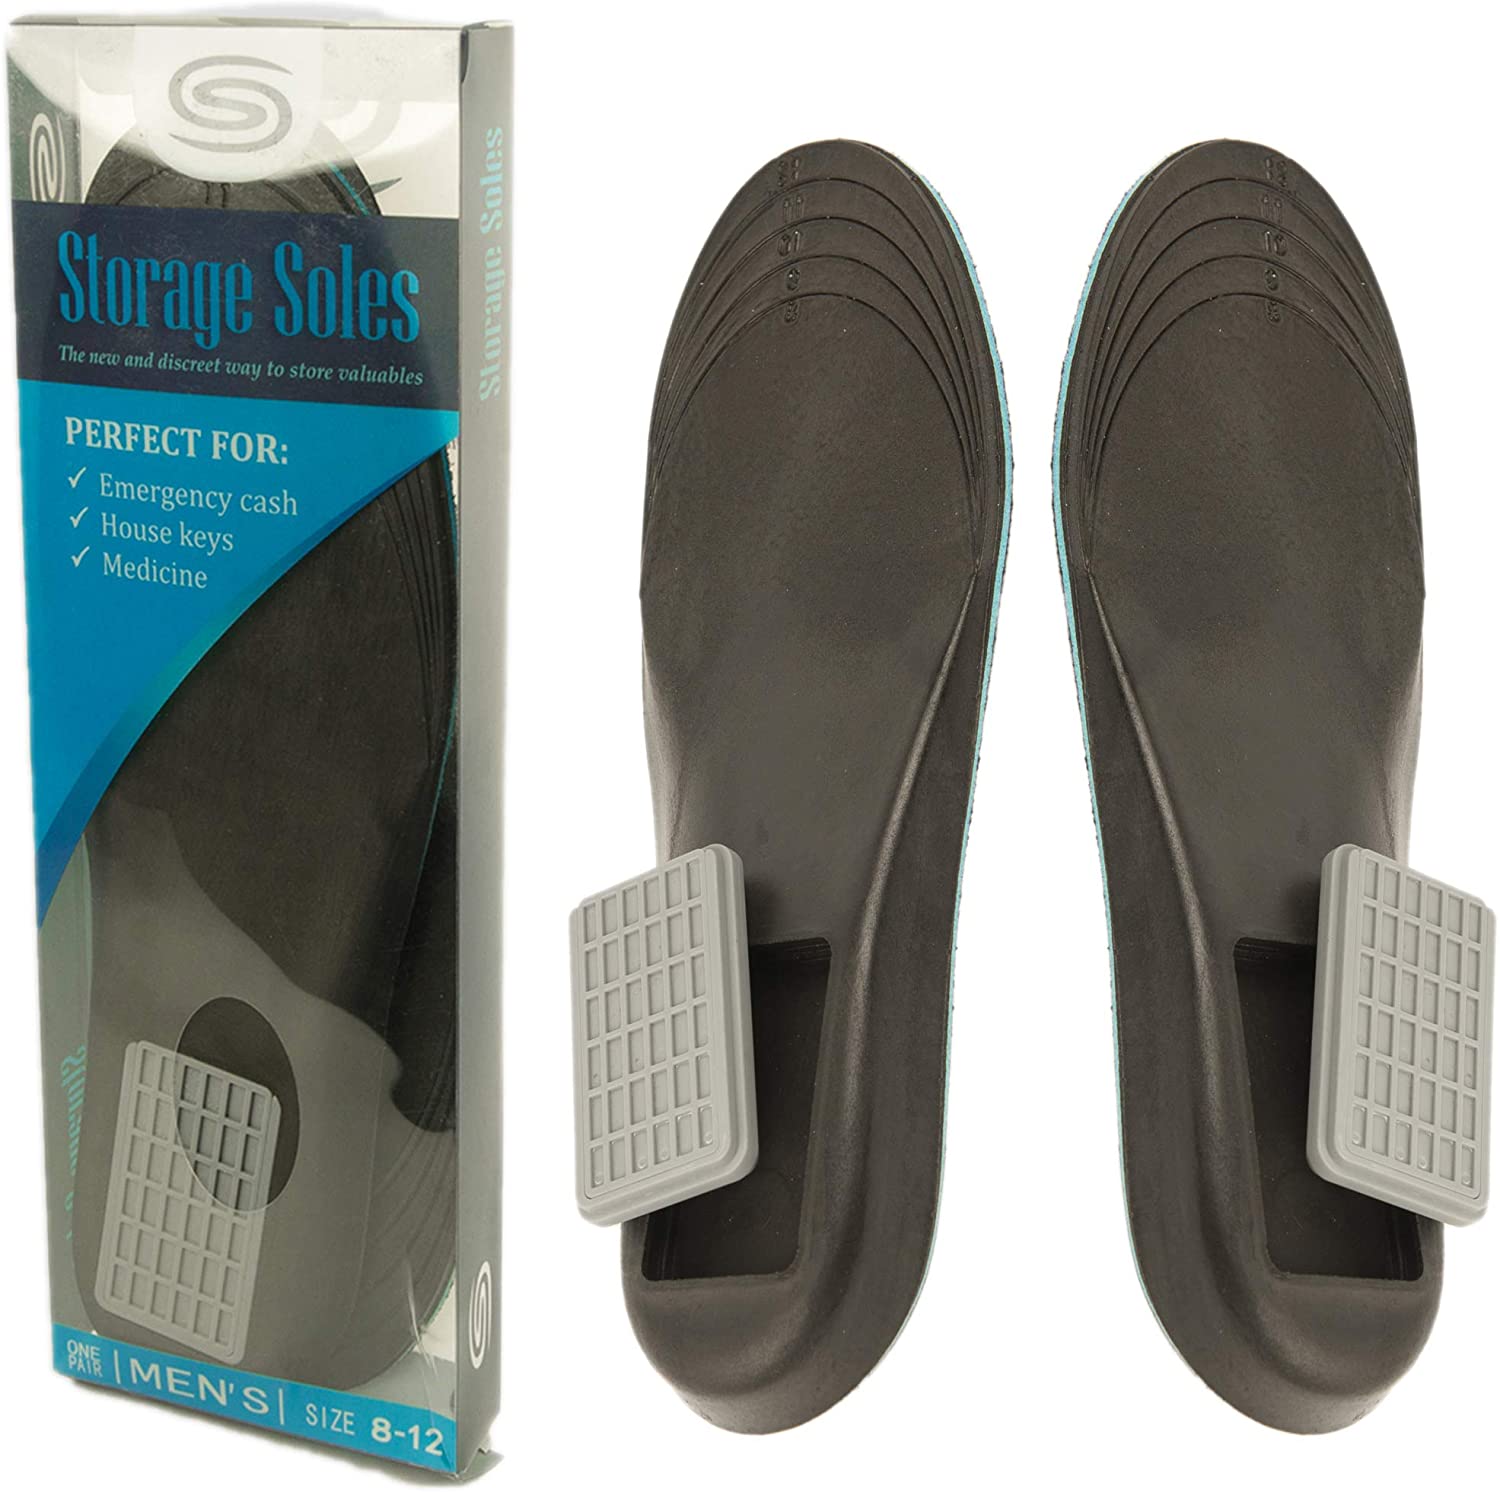 Secret Storage Shoe Insoles - Shoe insoles with storage stash container